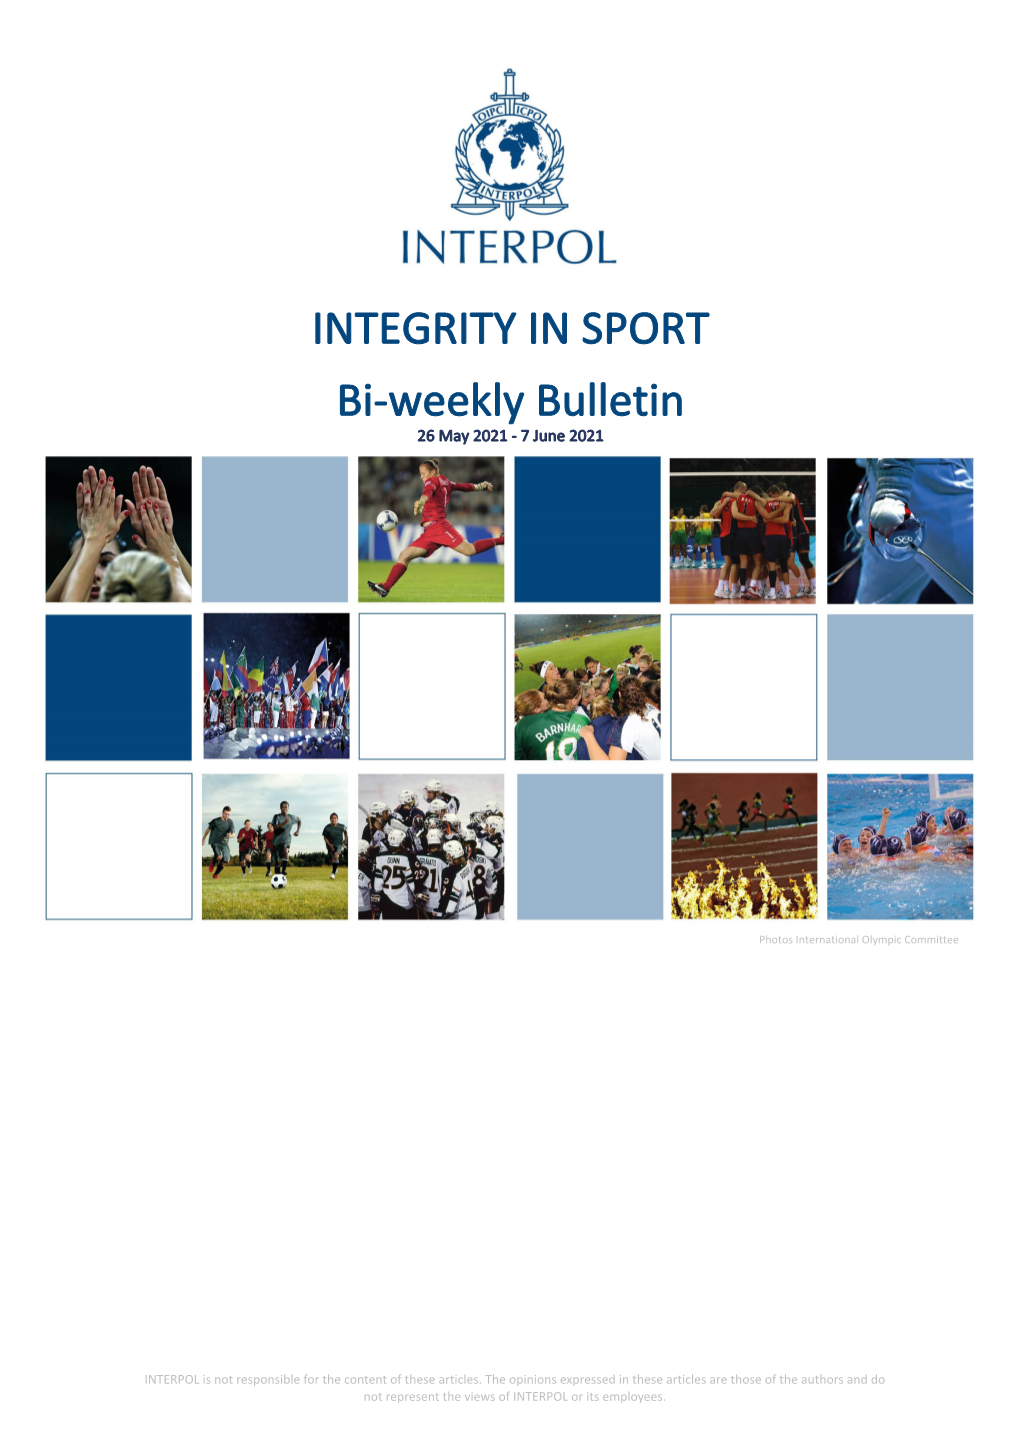 INTEGRITY in SPORT Bi-Weekly Bulletin 26 May 2021 - 7 June 2021